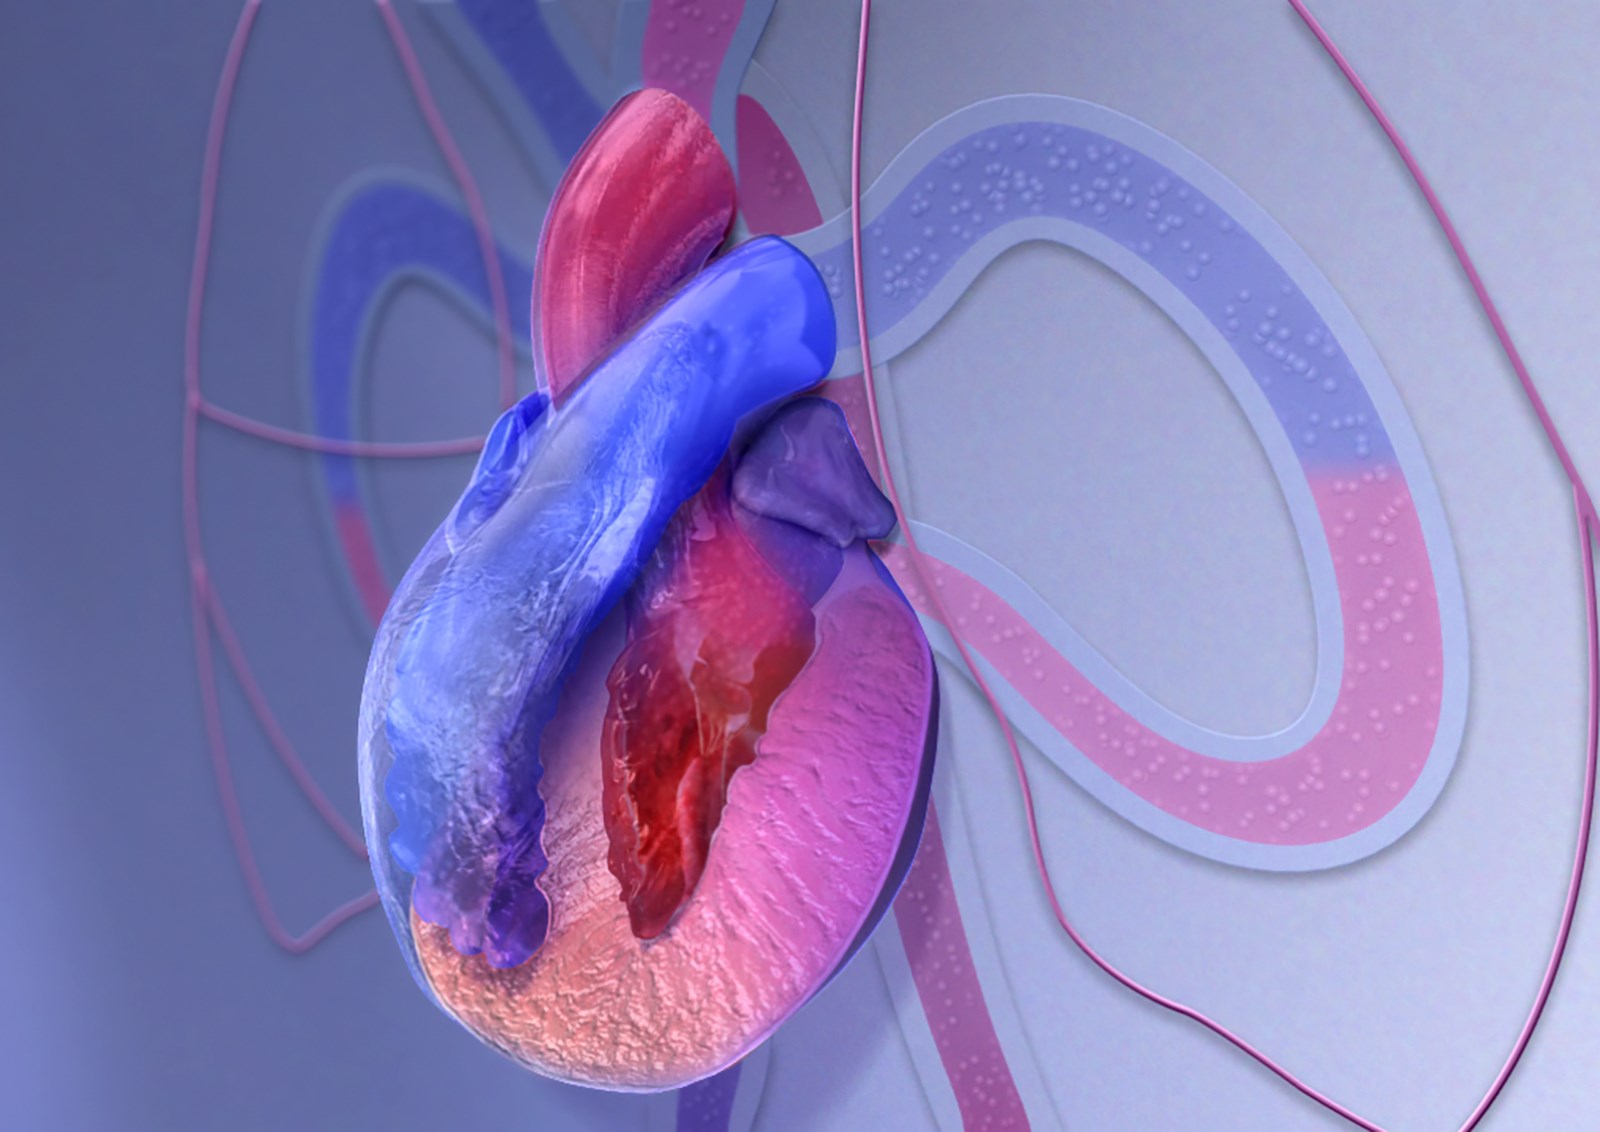 Management of arrhythmogenic right ventricular cardiomyopathy